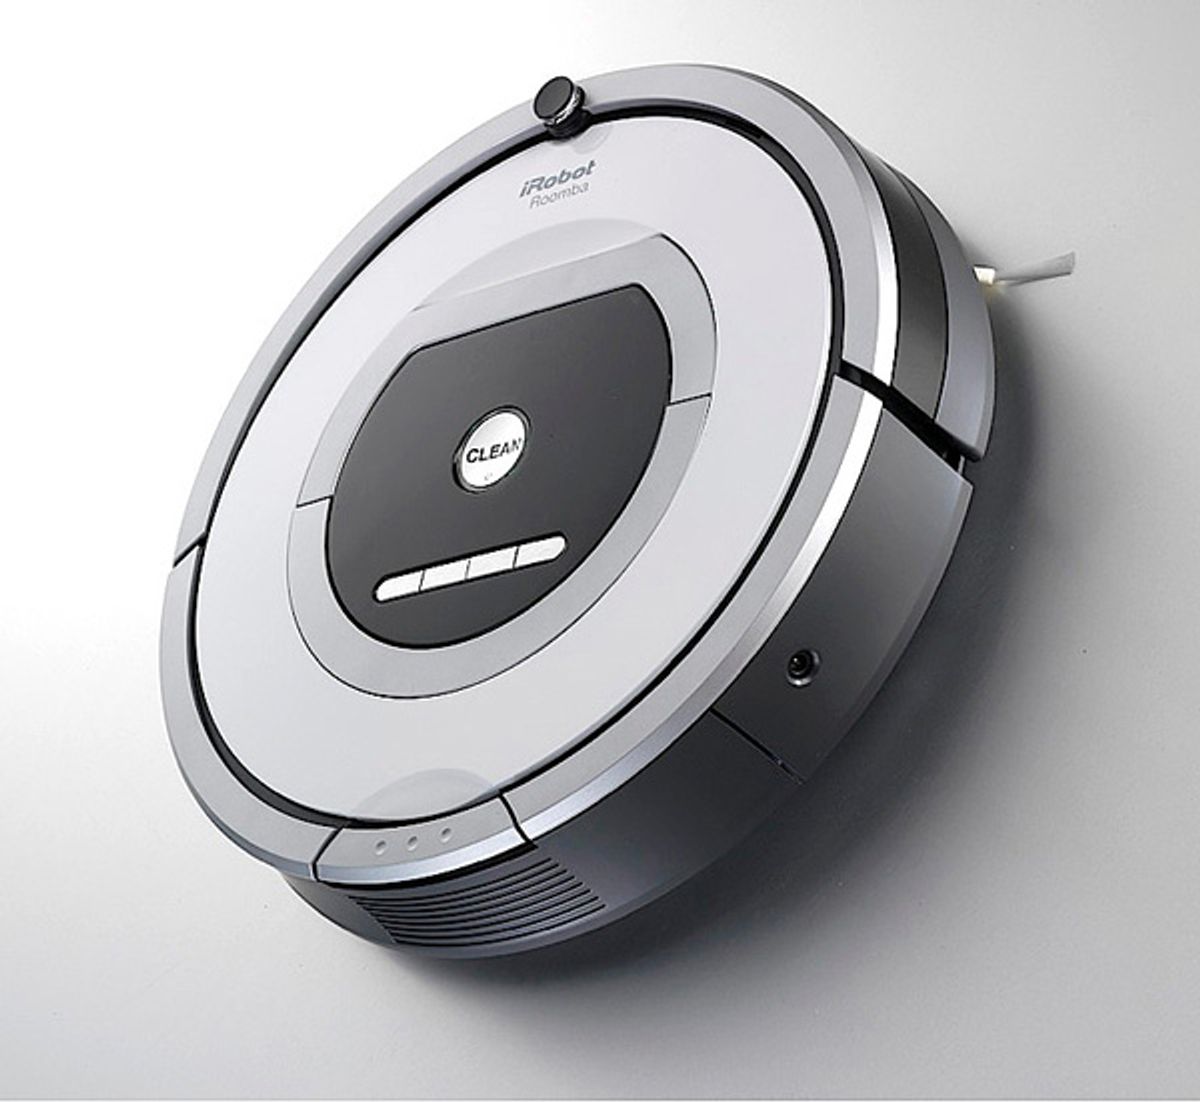 New Roomba 700 Series from iRobot